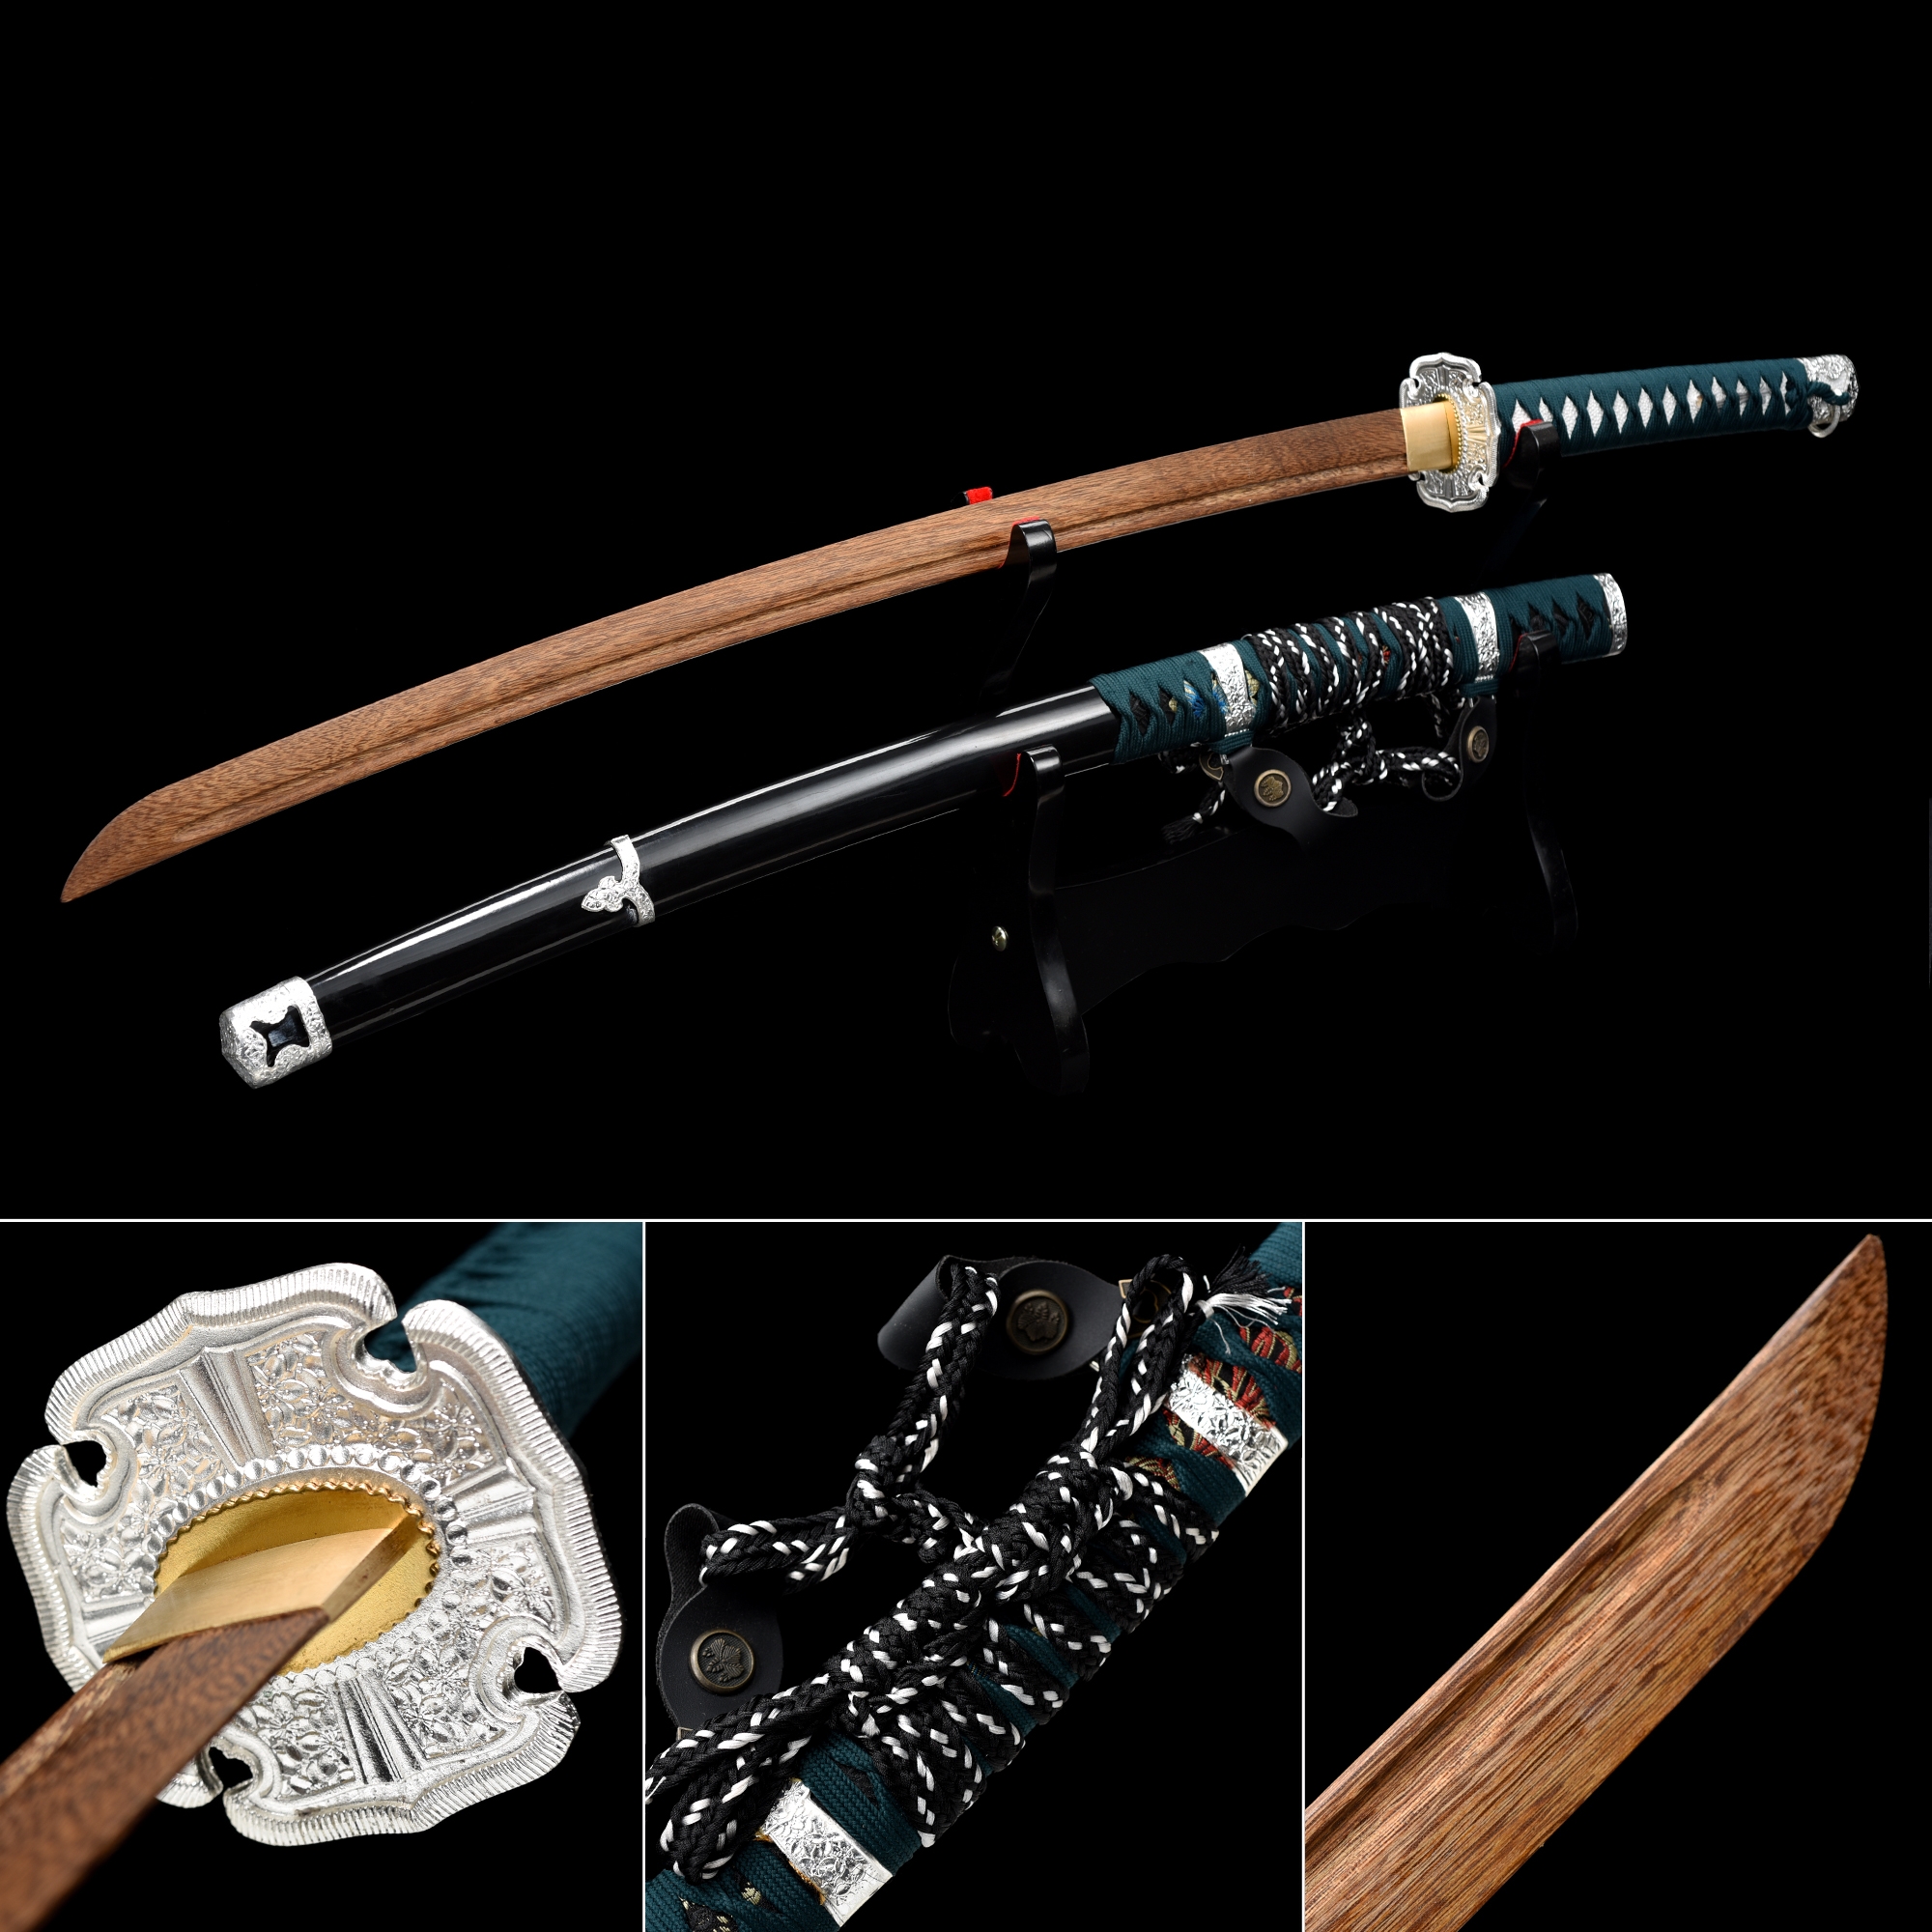 Handmade Brown Wooden Blunt Unsharpened Blade Katana Sword With Black Scabbard And Alloy Tsuba